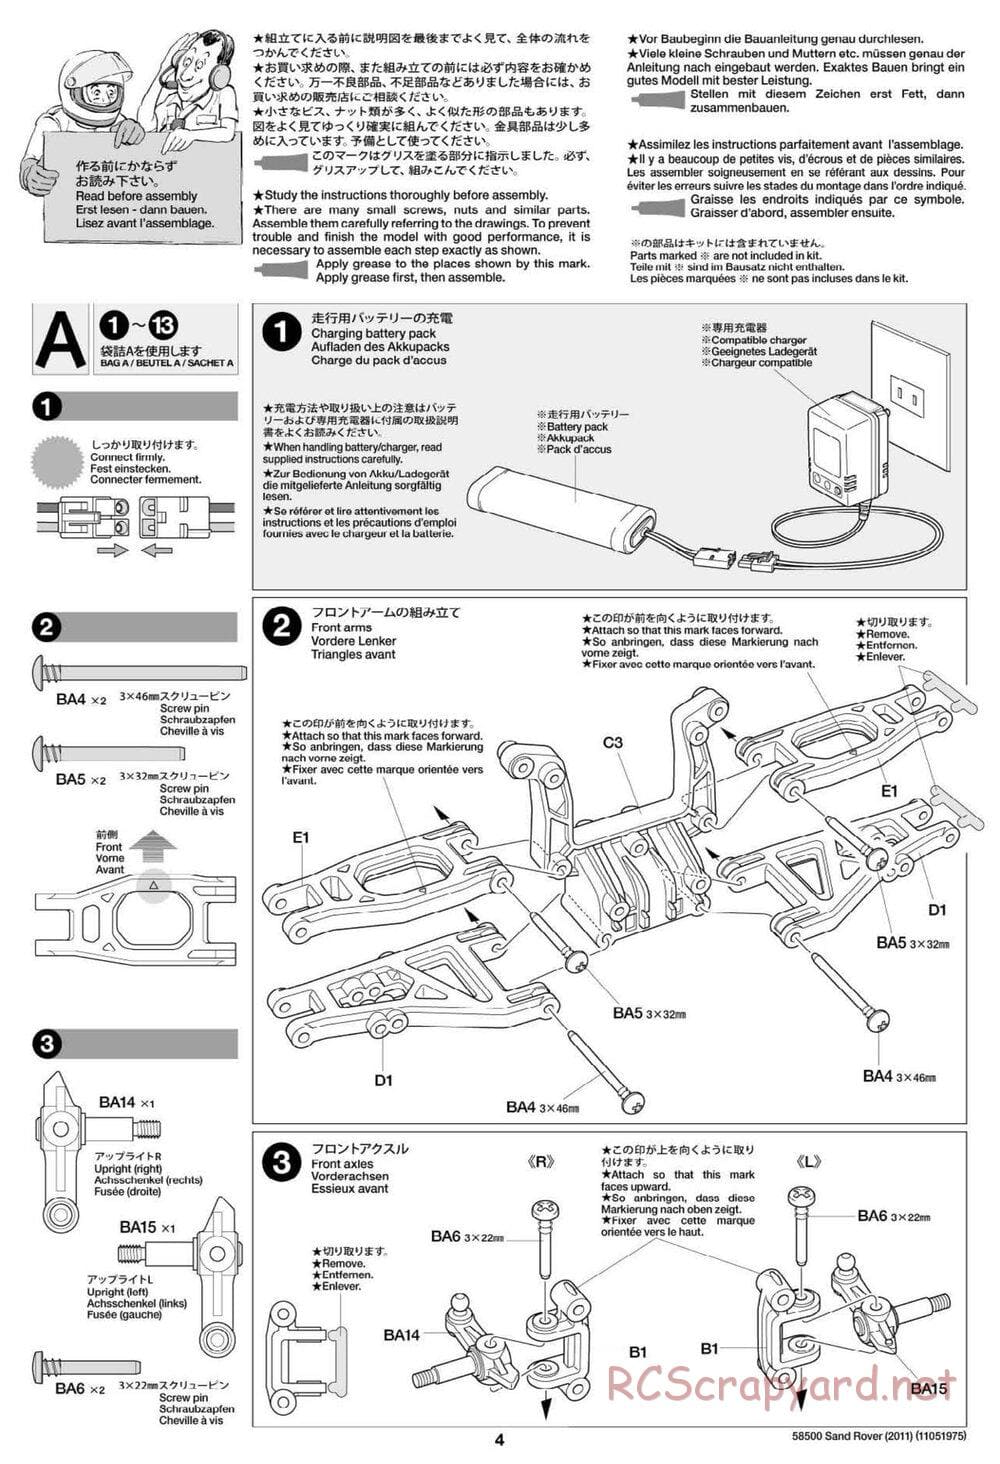 Tamiya - Sand Rover 2011 Chassis - Manual - Page 4